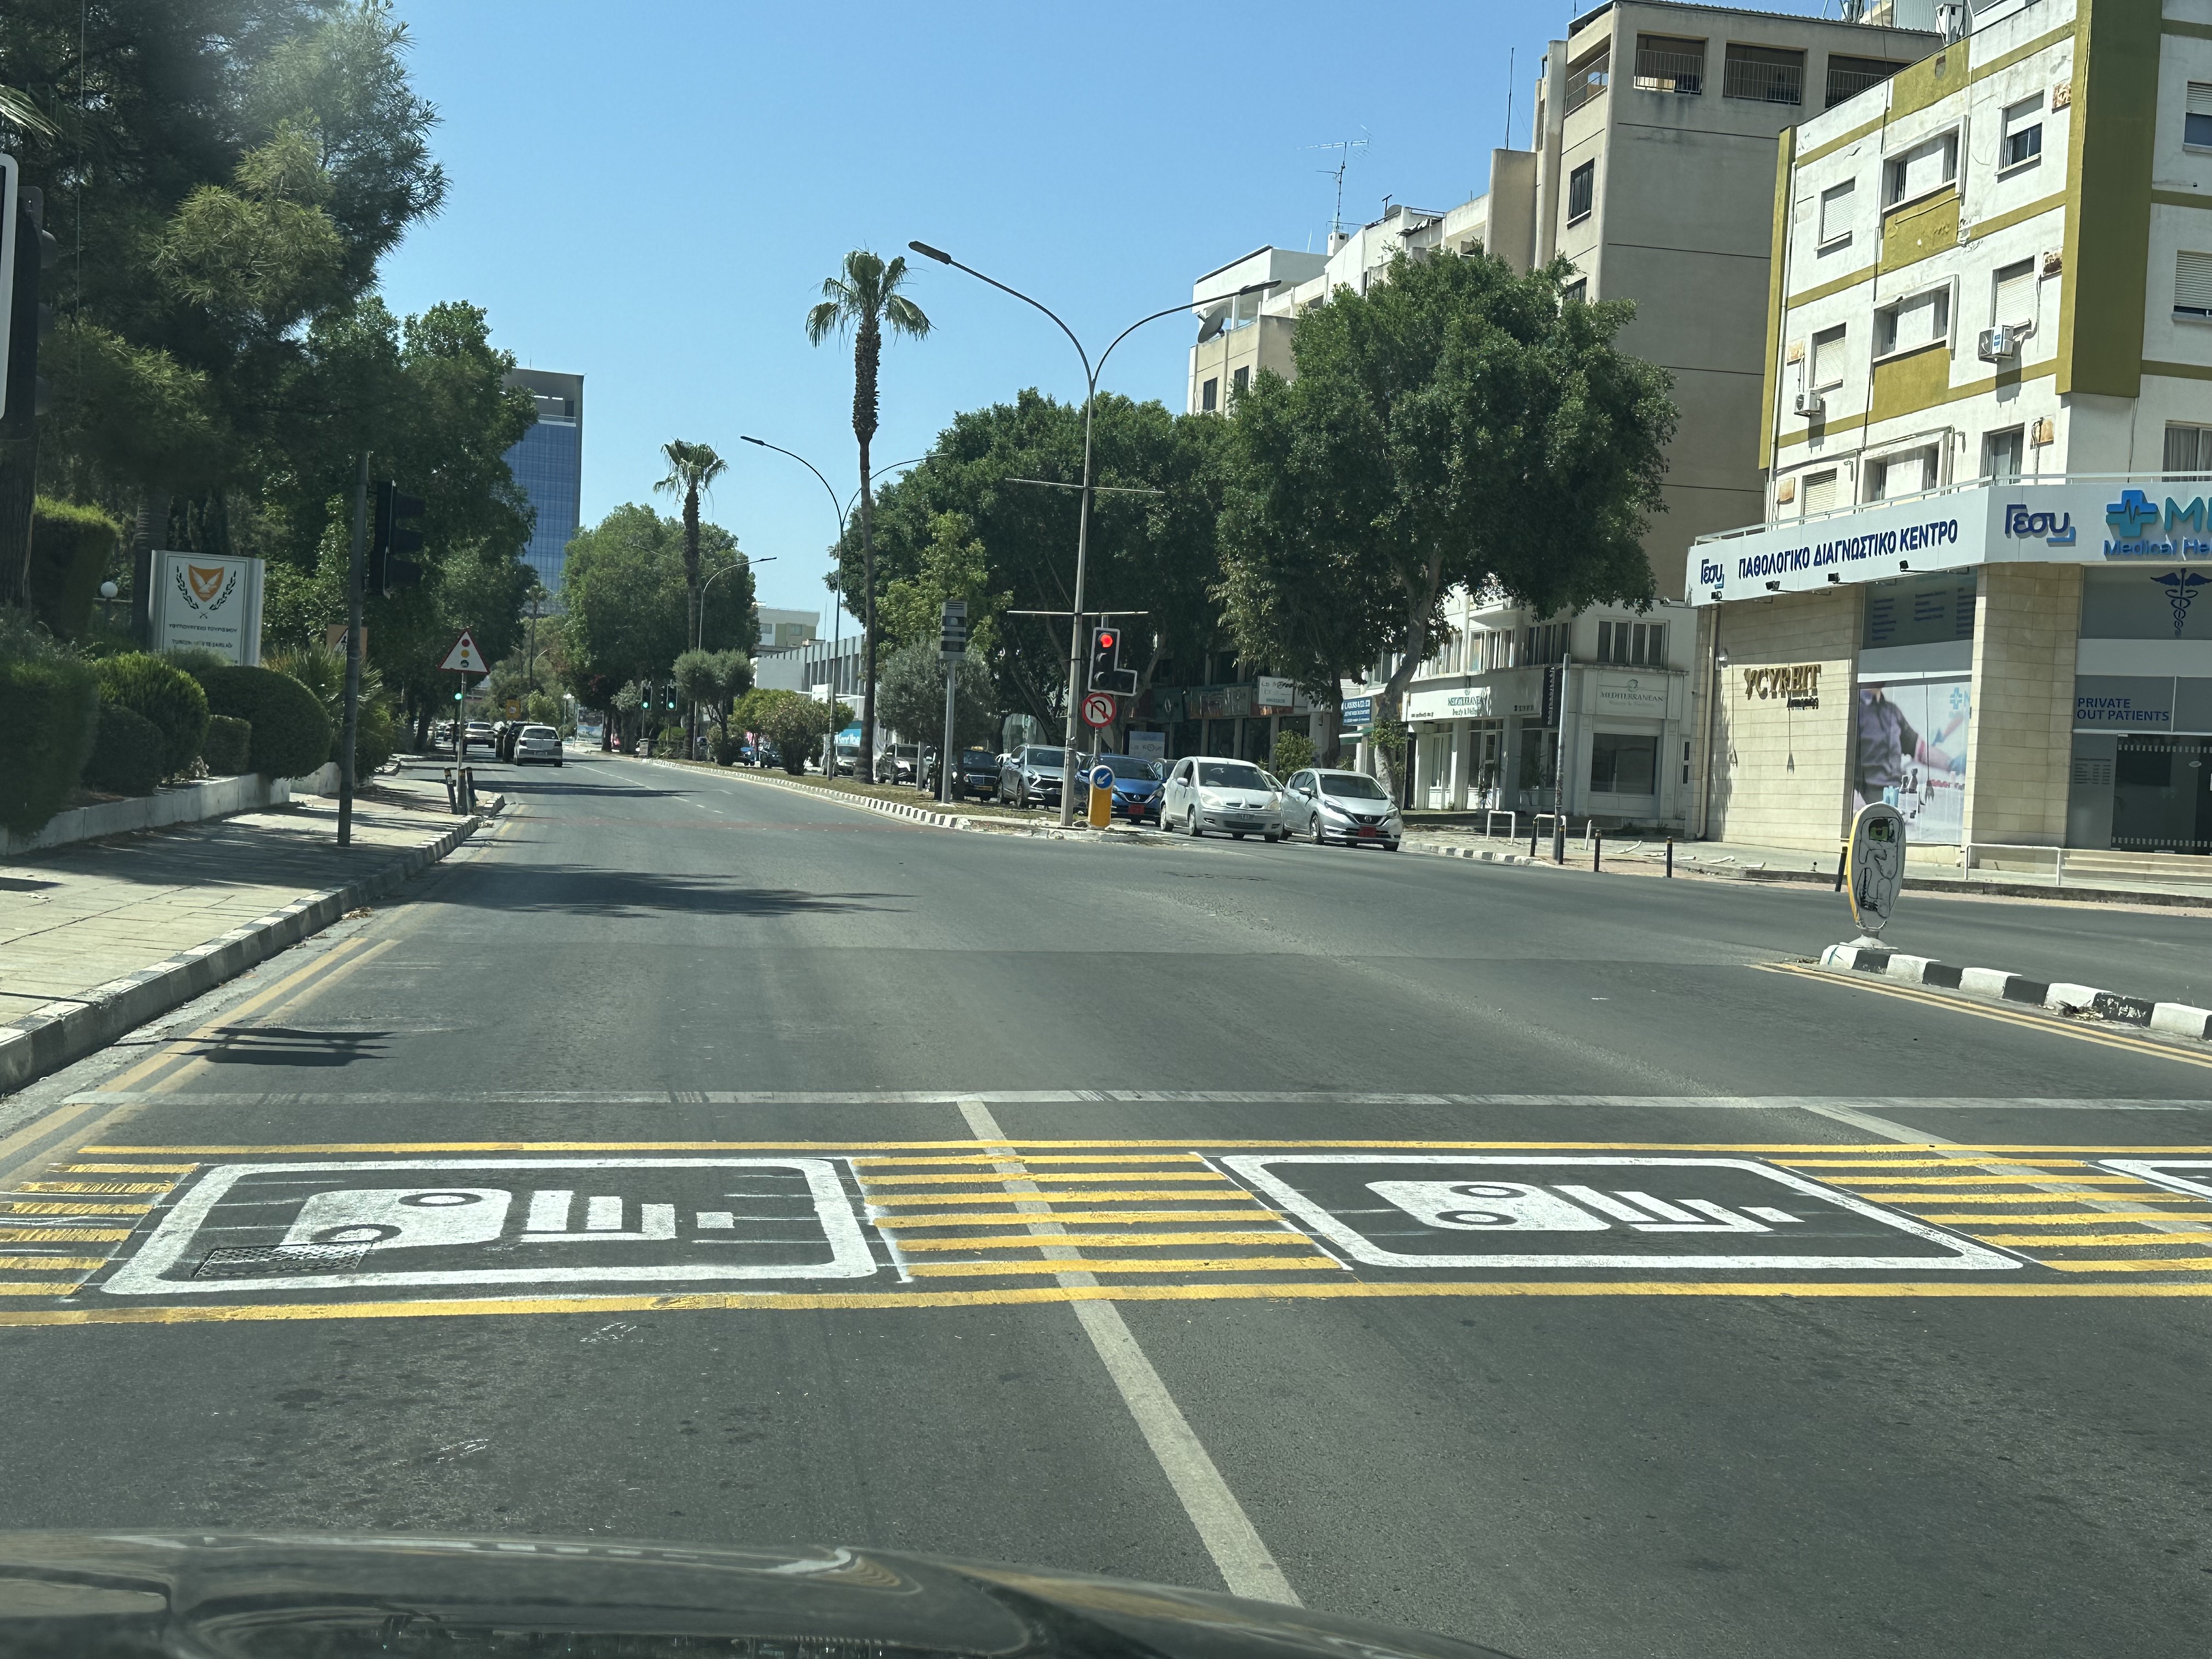 image Road markings warn of traffic cameras